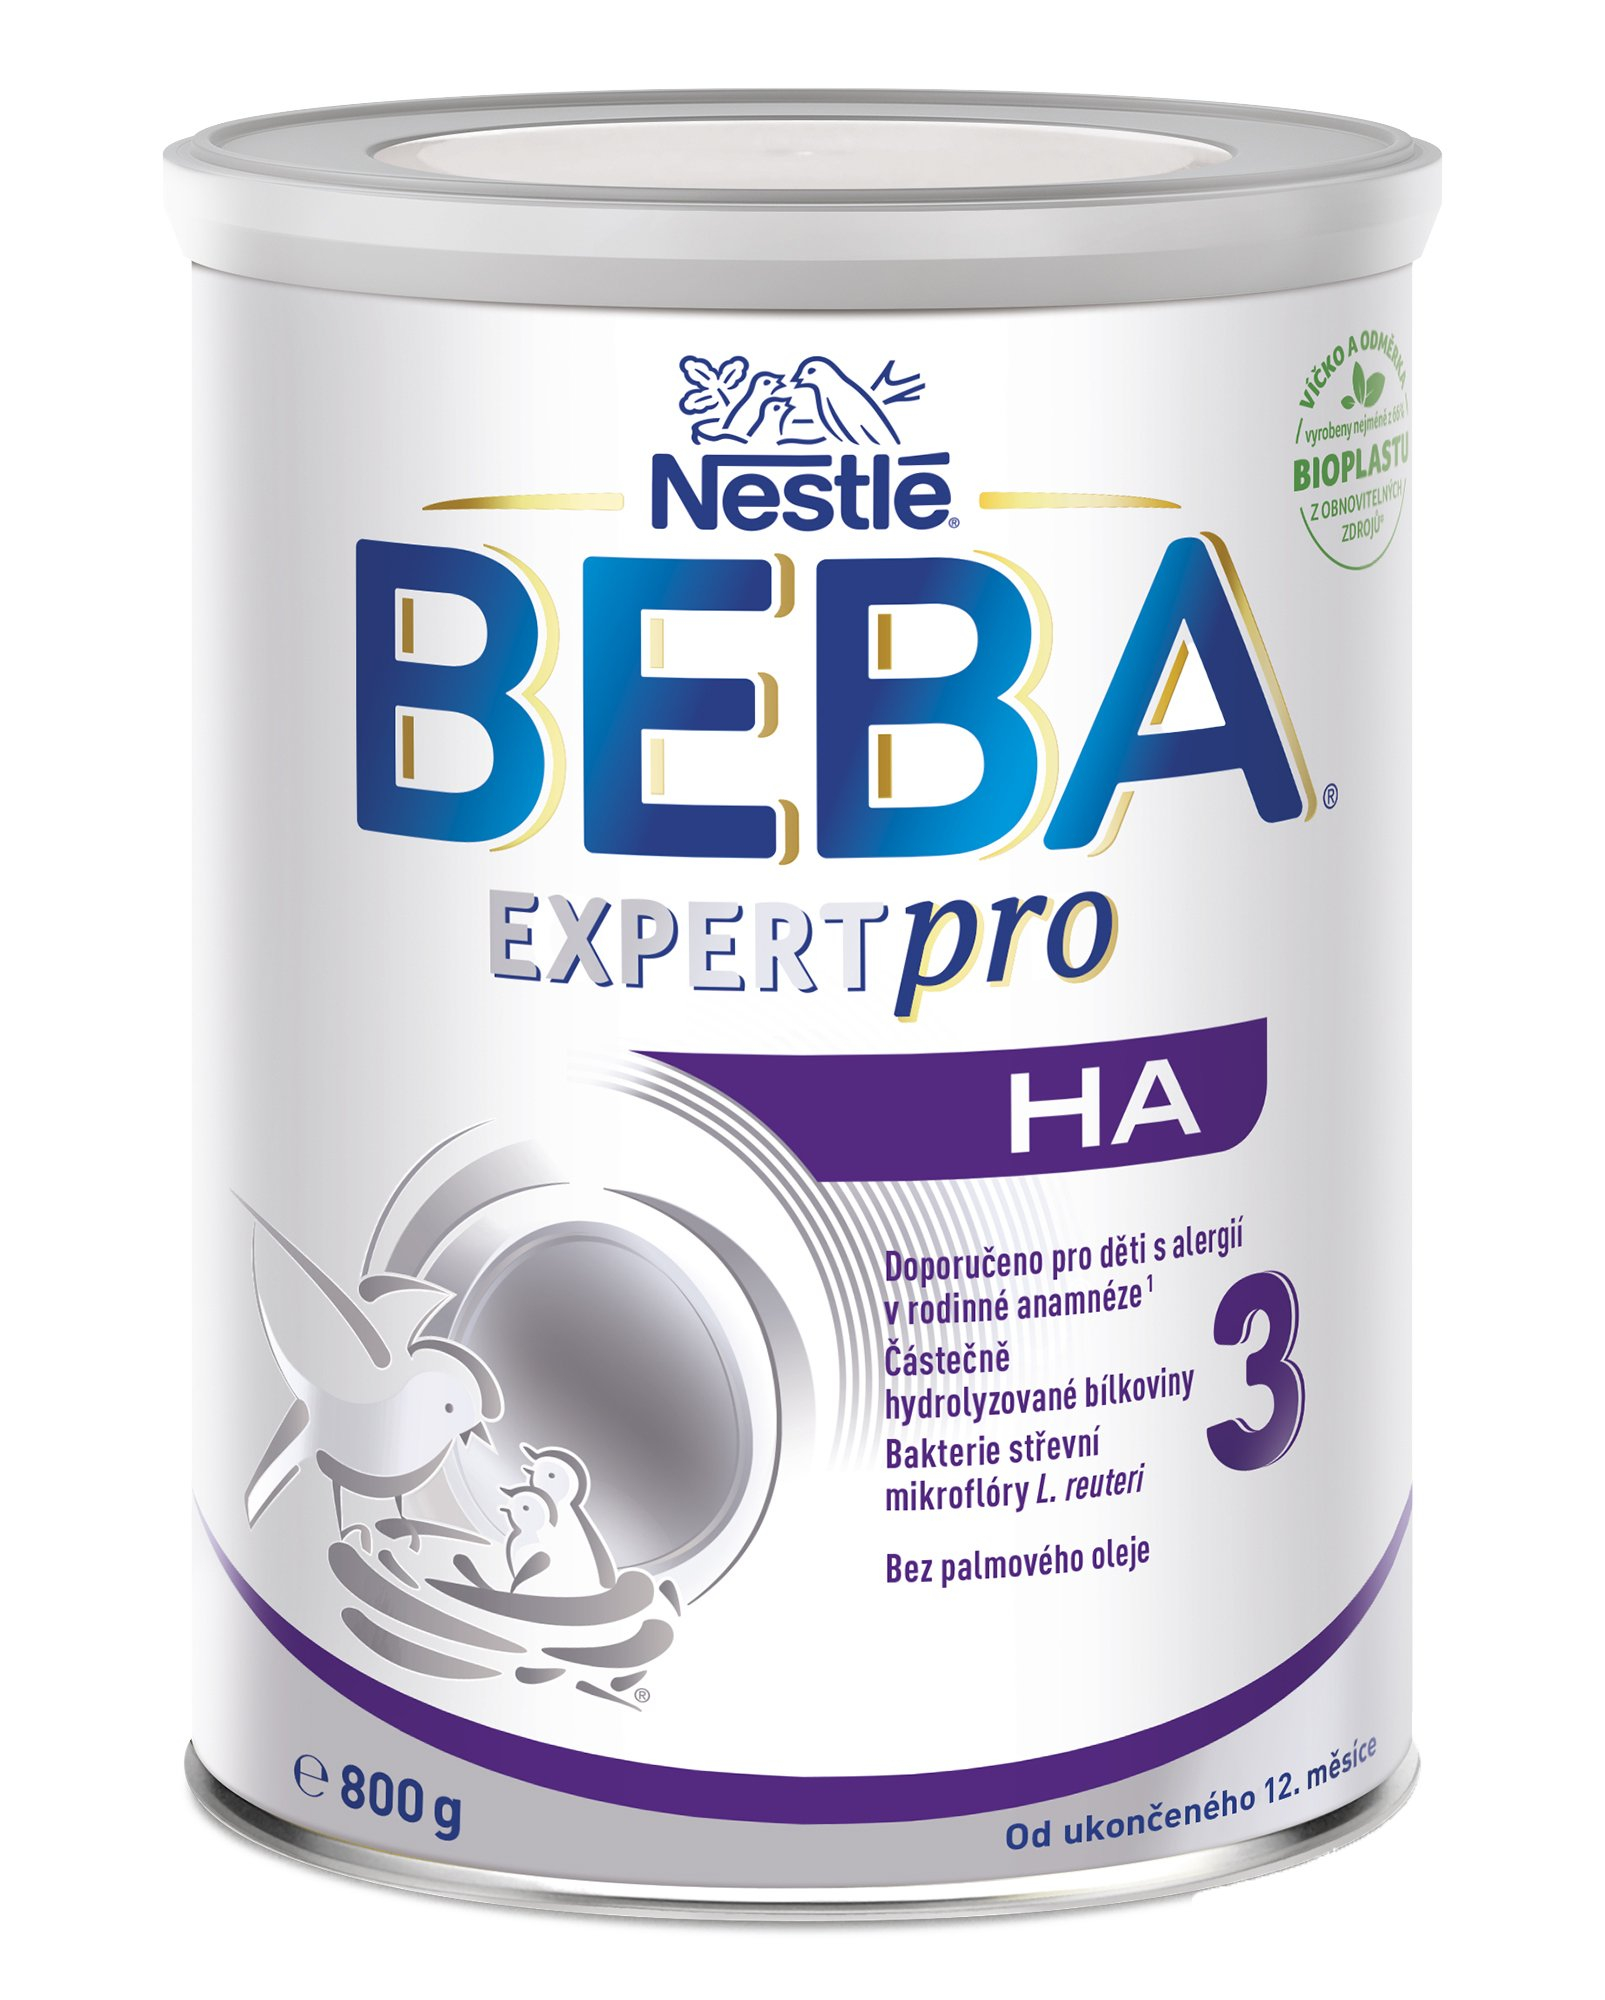 BEBA Expert pro HA 3 800 g